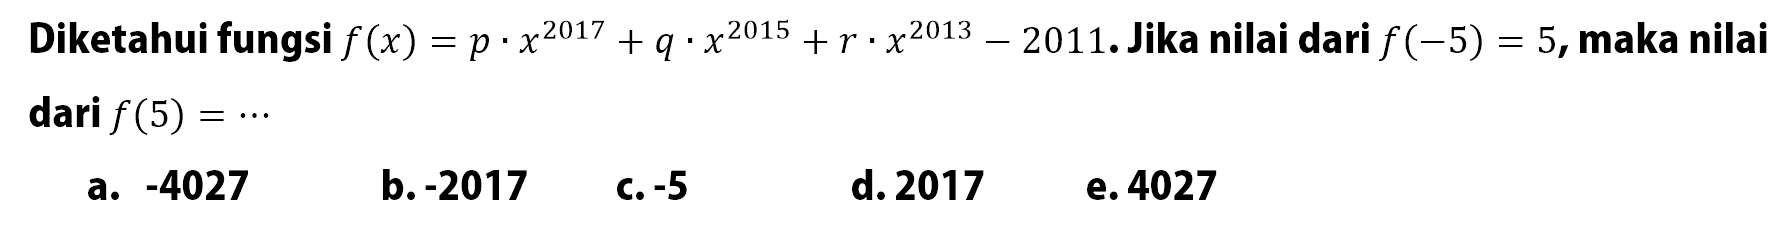 Diketahui fungsi  f(x)=p  x^2017+q . x^2015+r. x^2013-2011. Jika nilai dari  f(-5)=5 , maka nilai dari  f(5)=... 